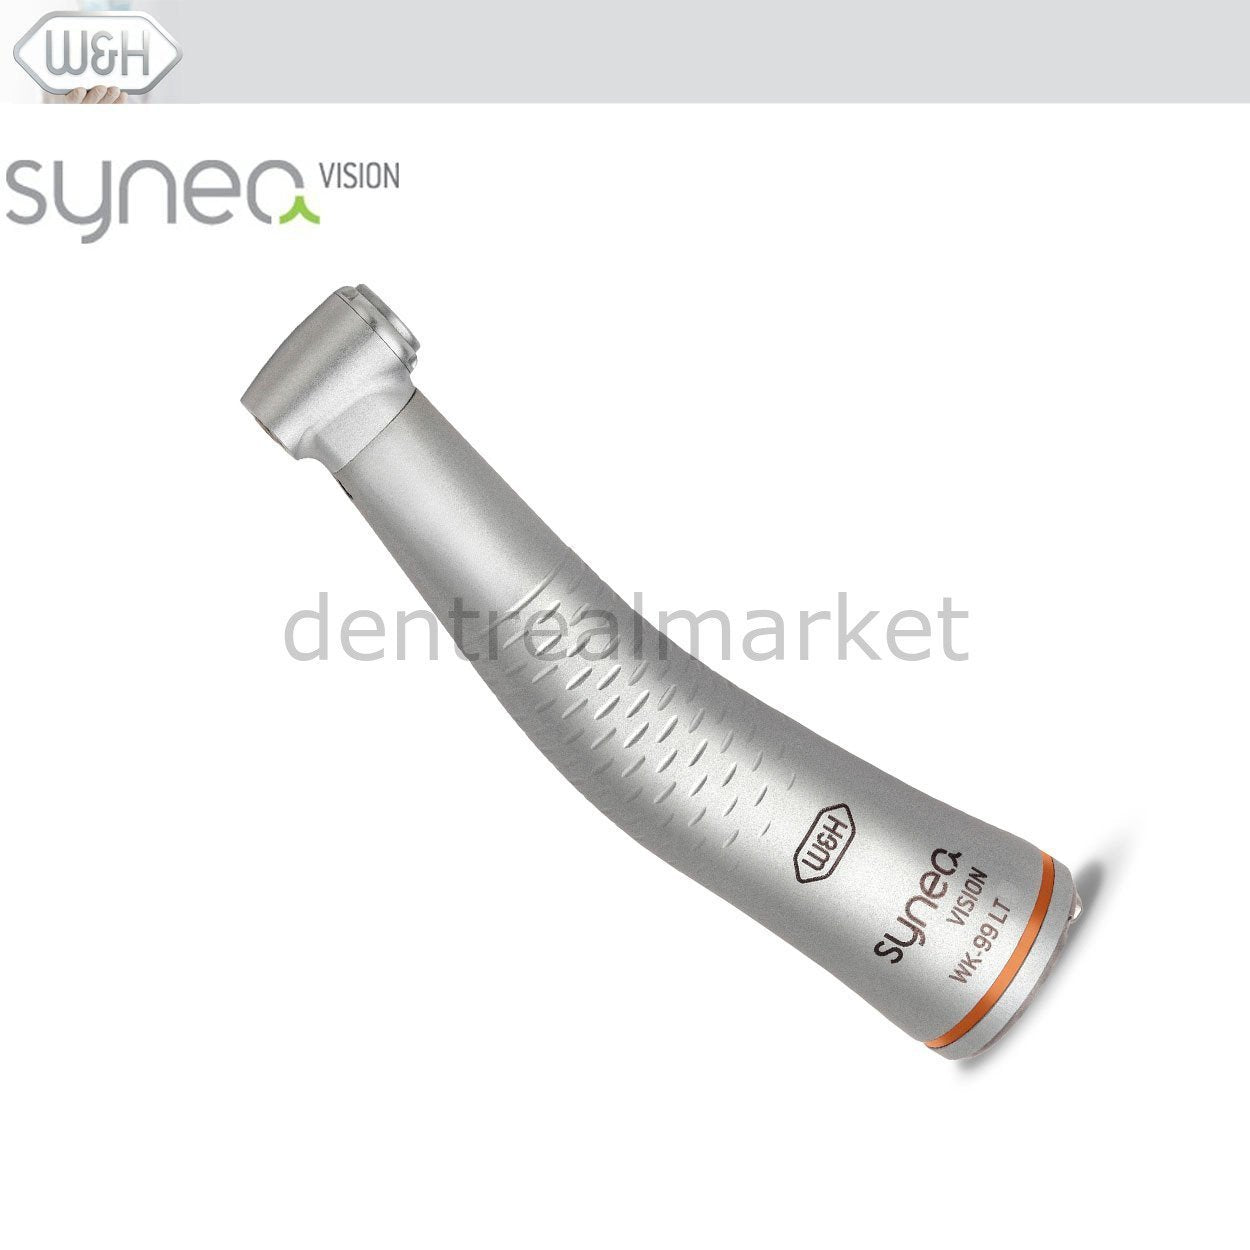 DentrealStore - W&H Dental WK-99 LT Synea Vision Contra-Angle - Glass Rod